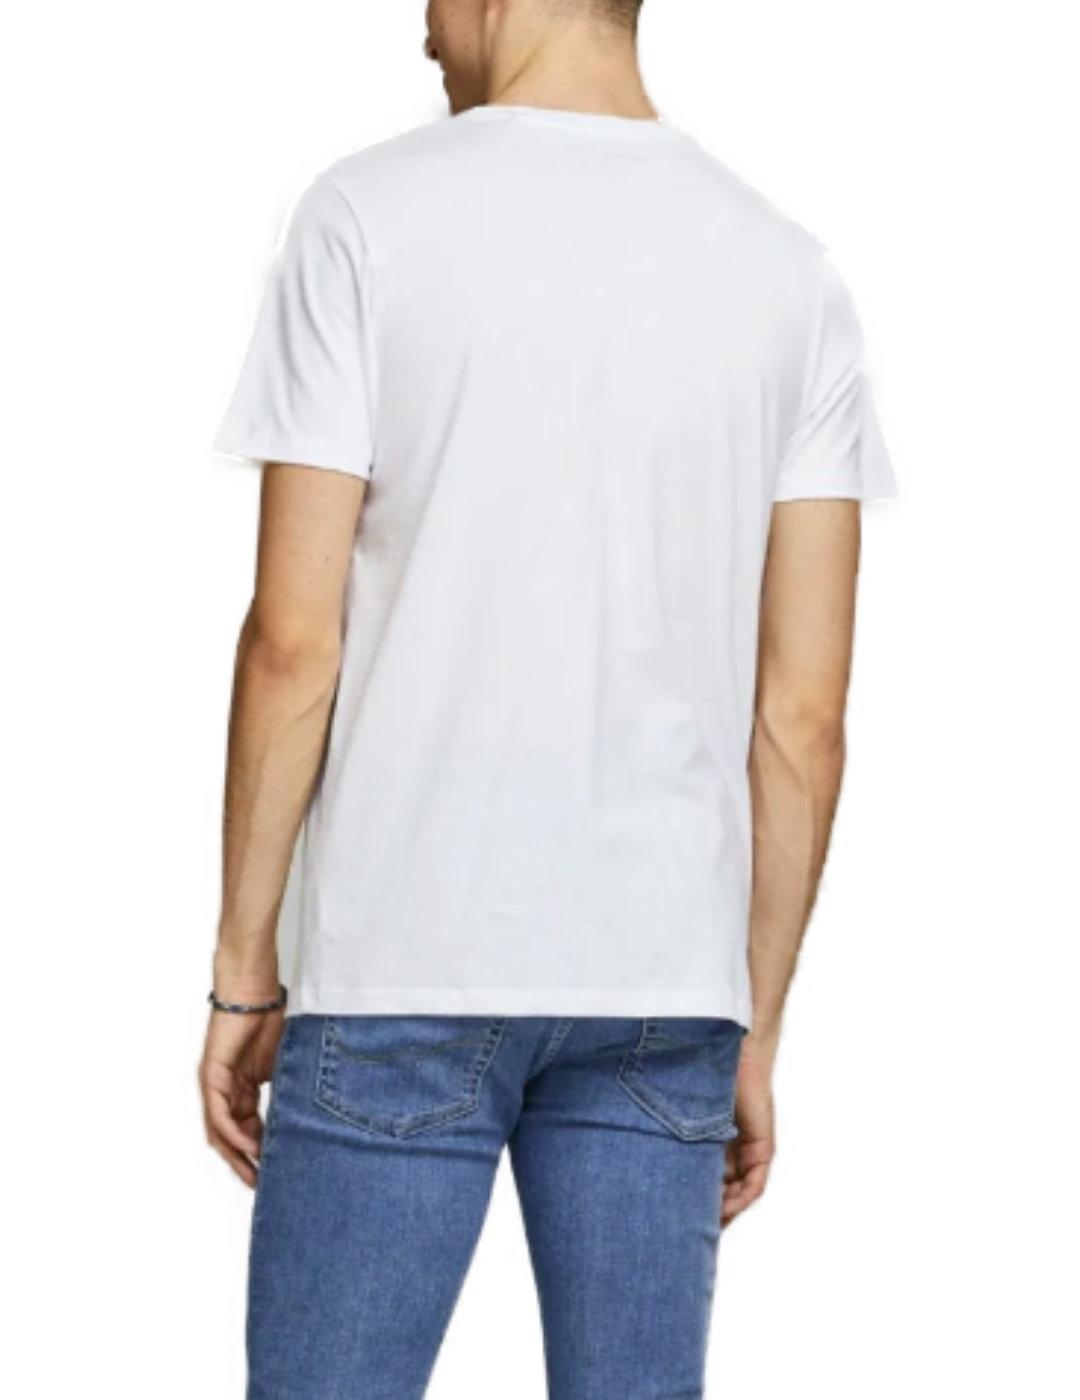 Camiseta Jack&Jones Basic blanco manga corta para hombre